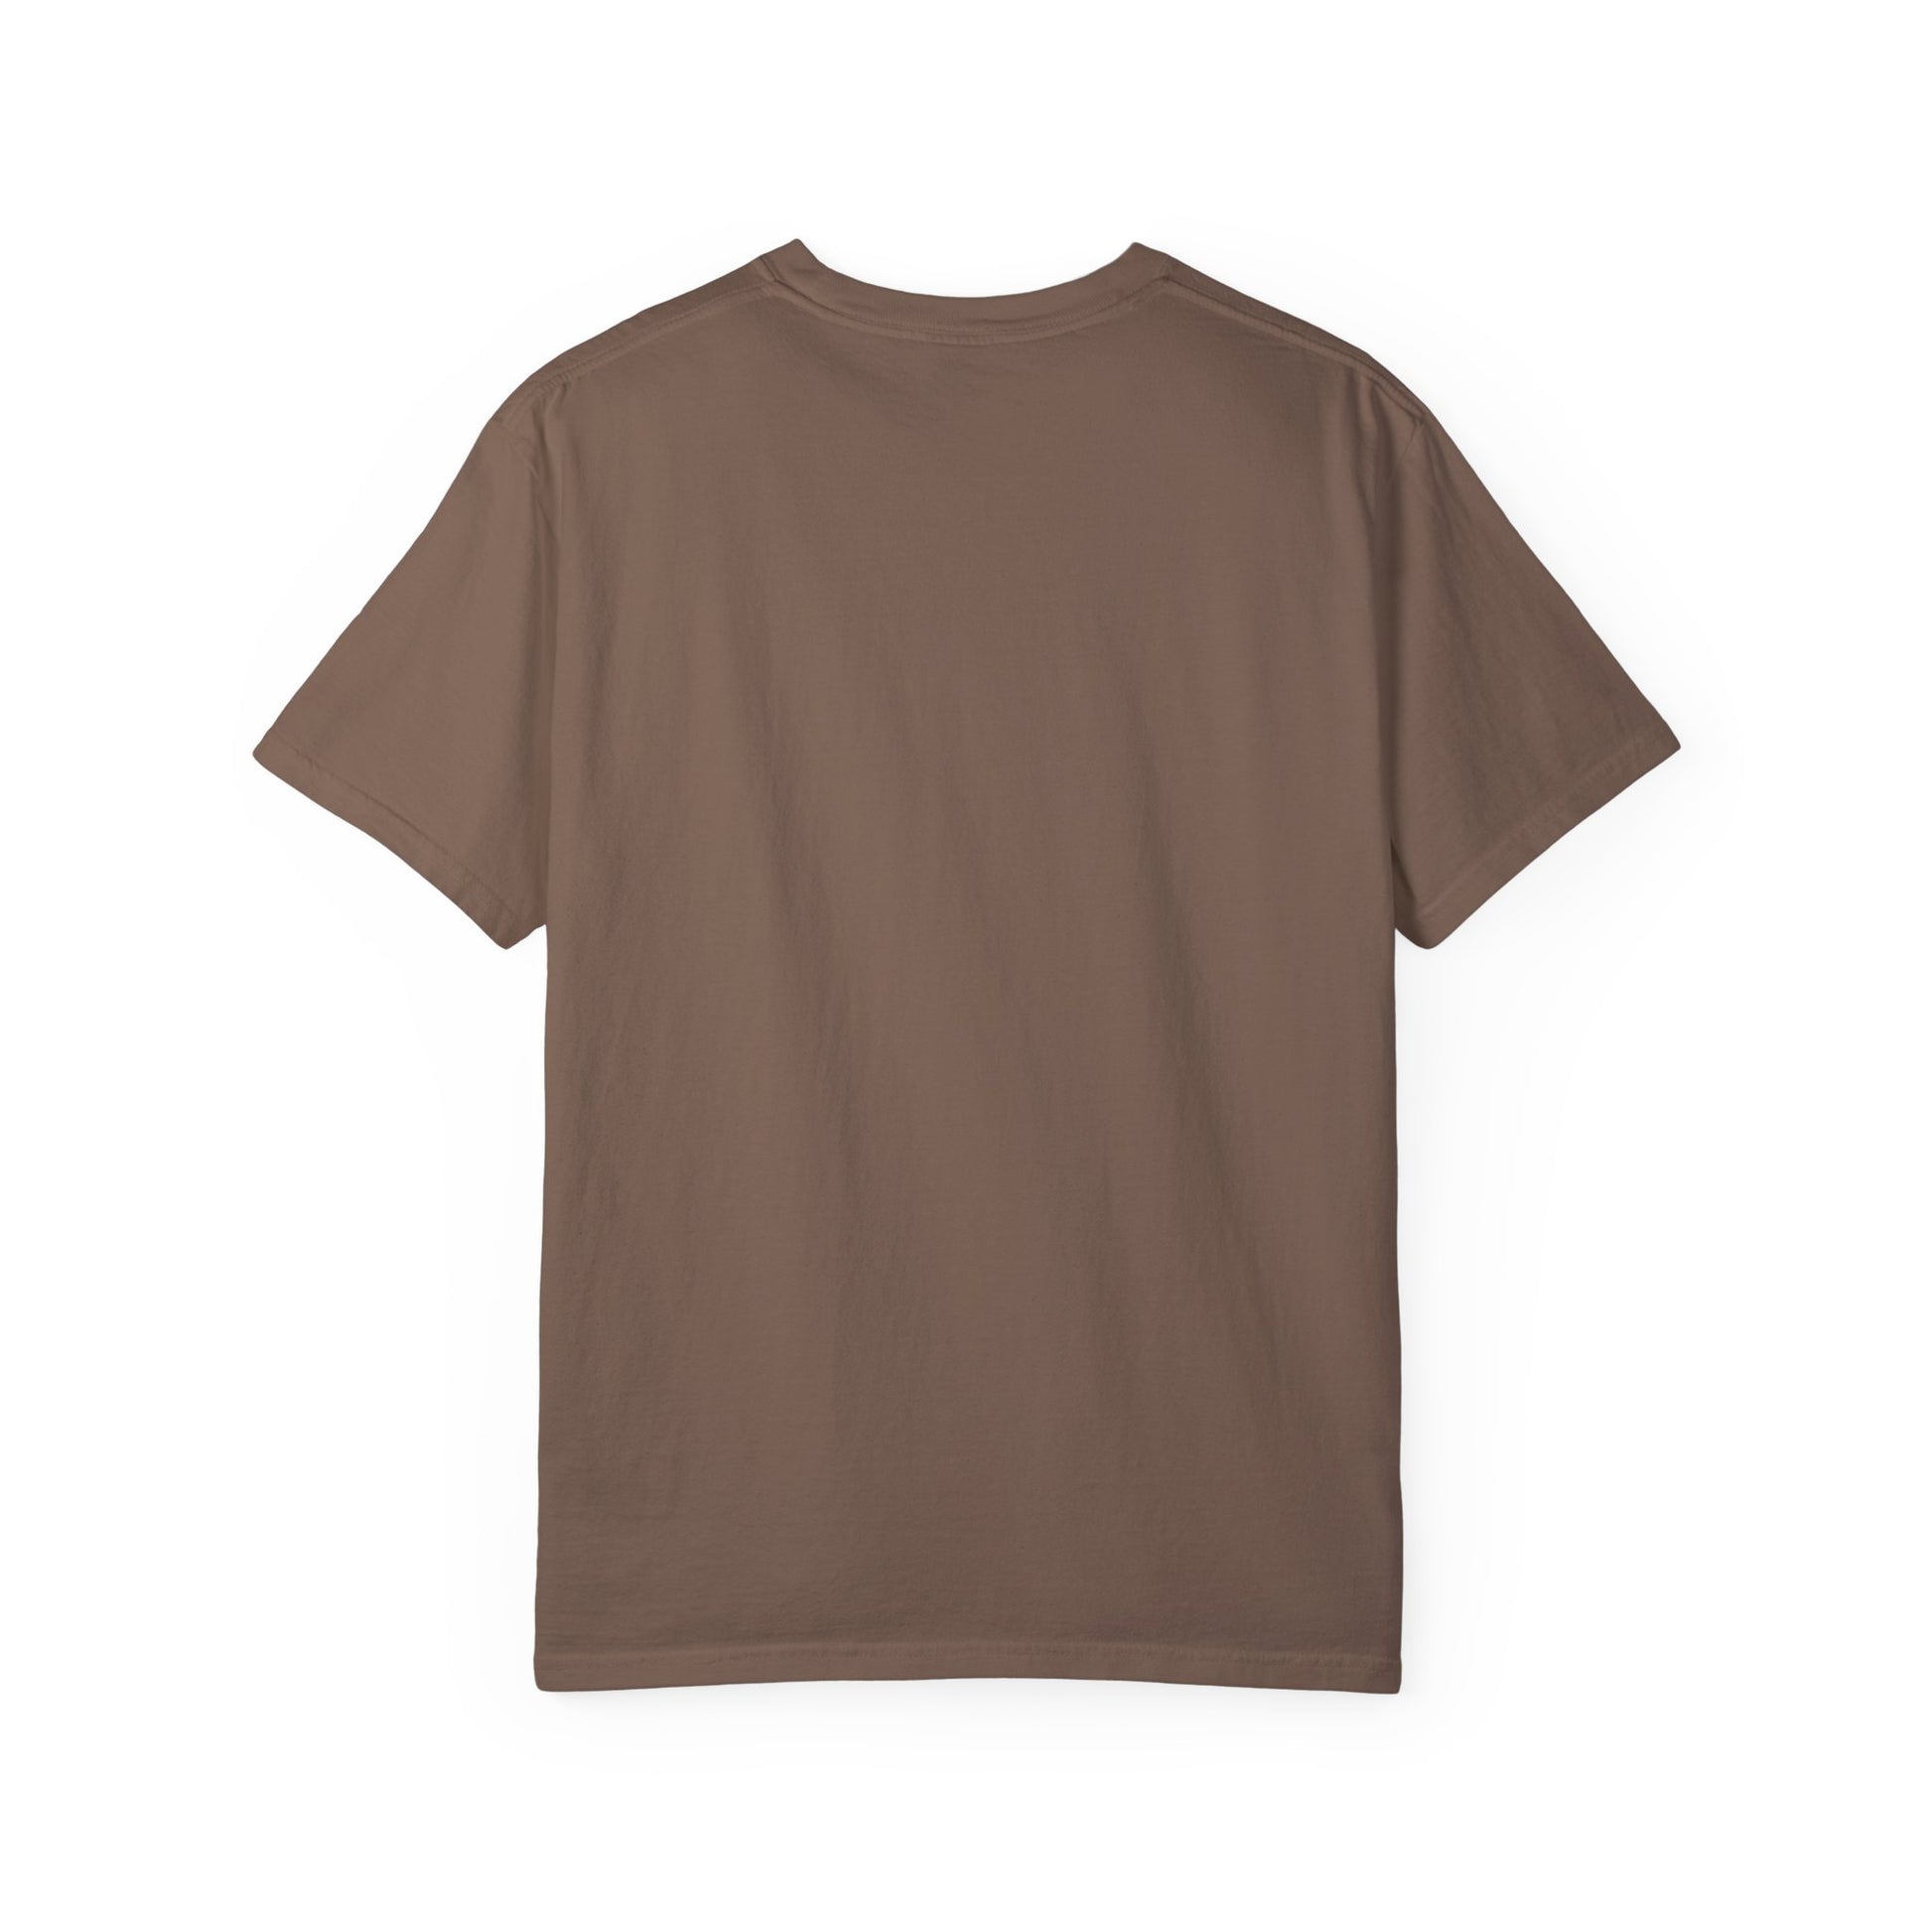 Hip Hop Teddy Bear Graphic Unisex Garment-dyed T-shirt Cotton Funny Humorous Graphic Soft Premium Unisex Men Women Espresso T-shirt Birthday Gift-58